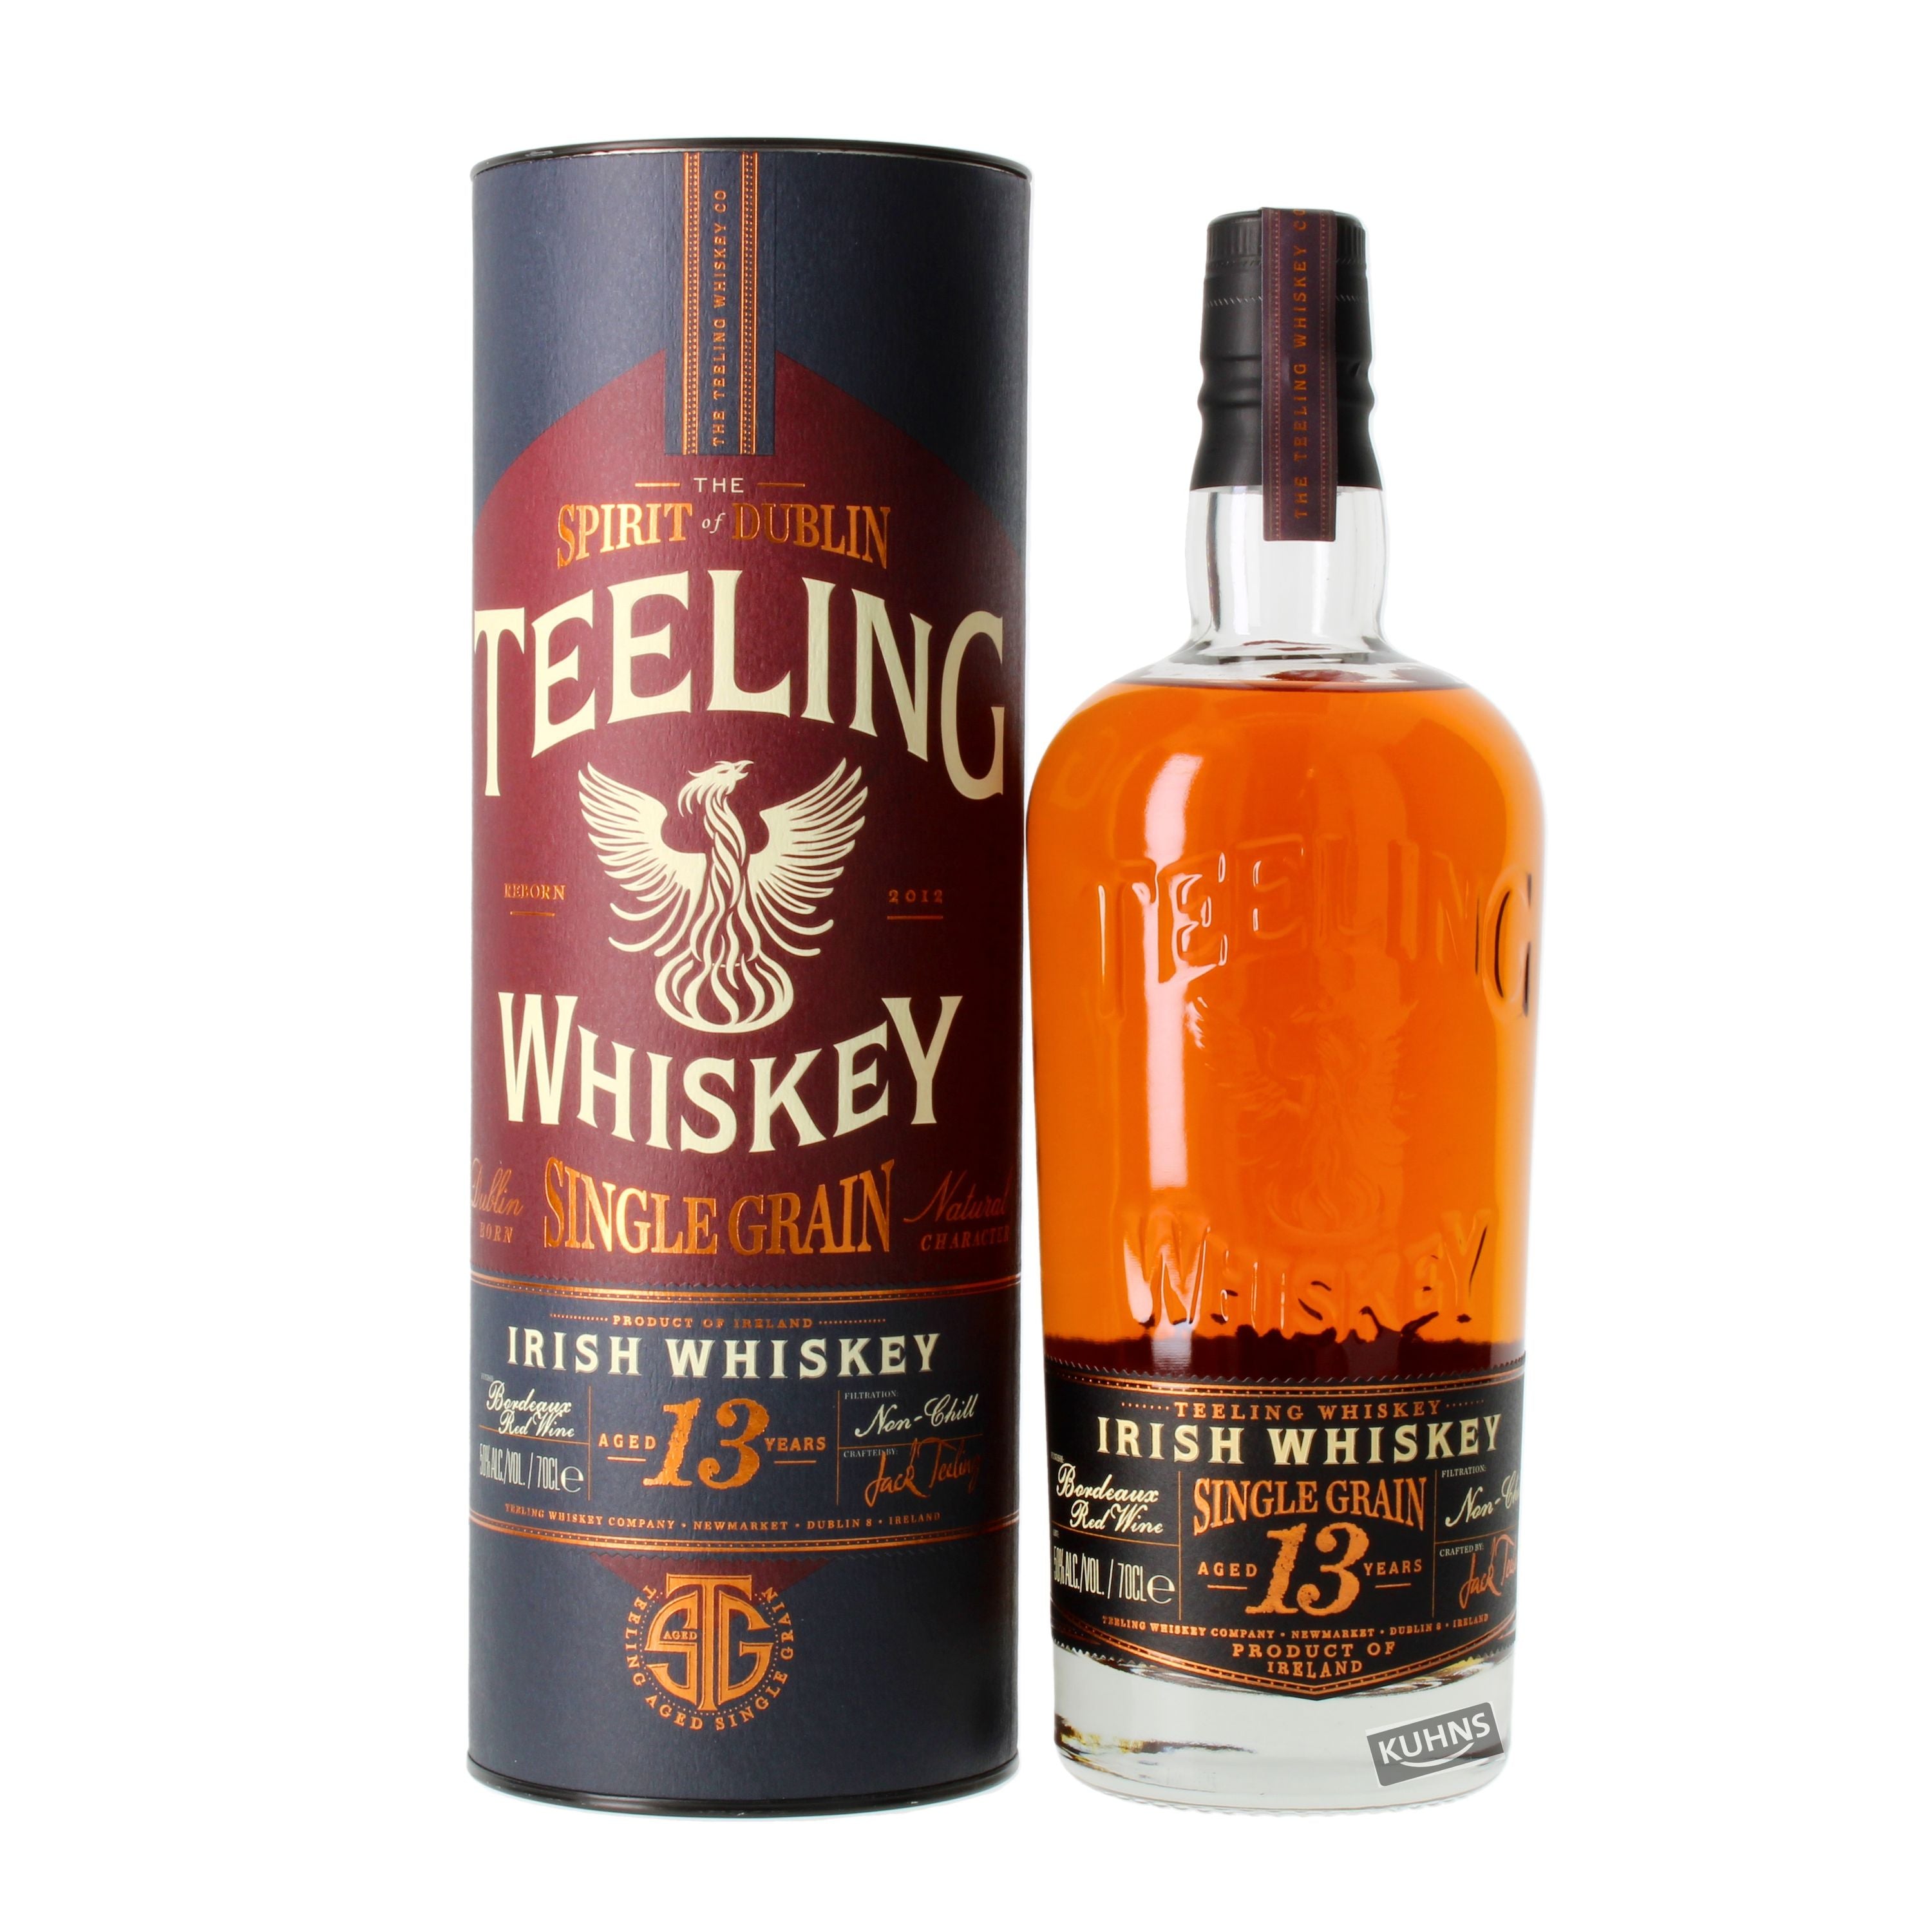 Teeling 13 Years Single Grain Irish Whiskey 0.7l, alc. 50% by volume